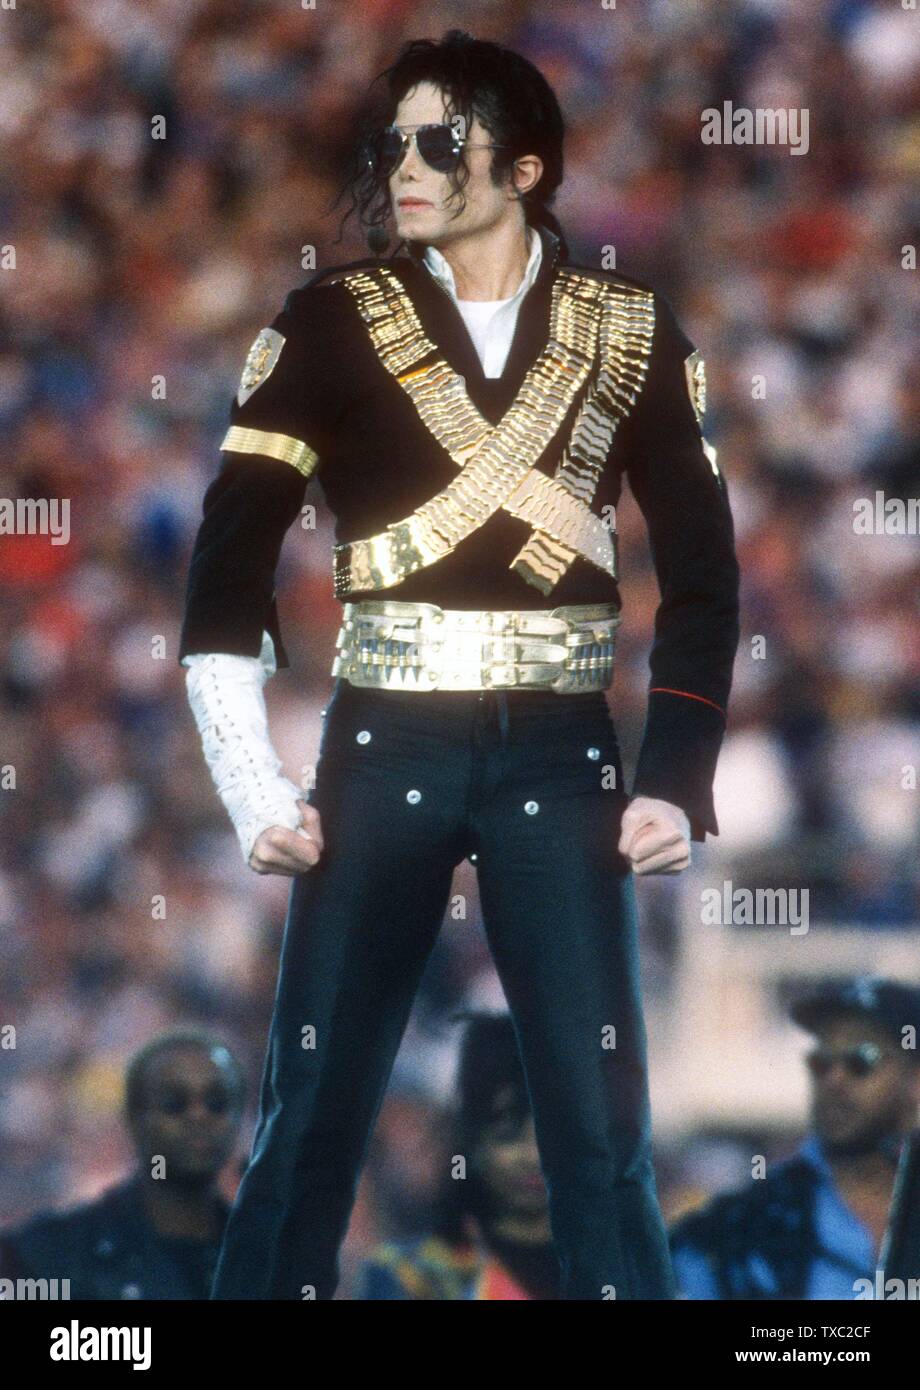 ***FILE PHOTO*** 10th Anniversary of Michael Jackson's Death Michael Jackson 1993 Photo By John Barrett/PHOTOlink.net/MediaPunch Stock Photo